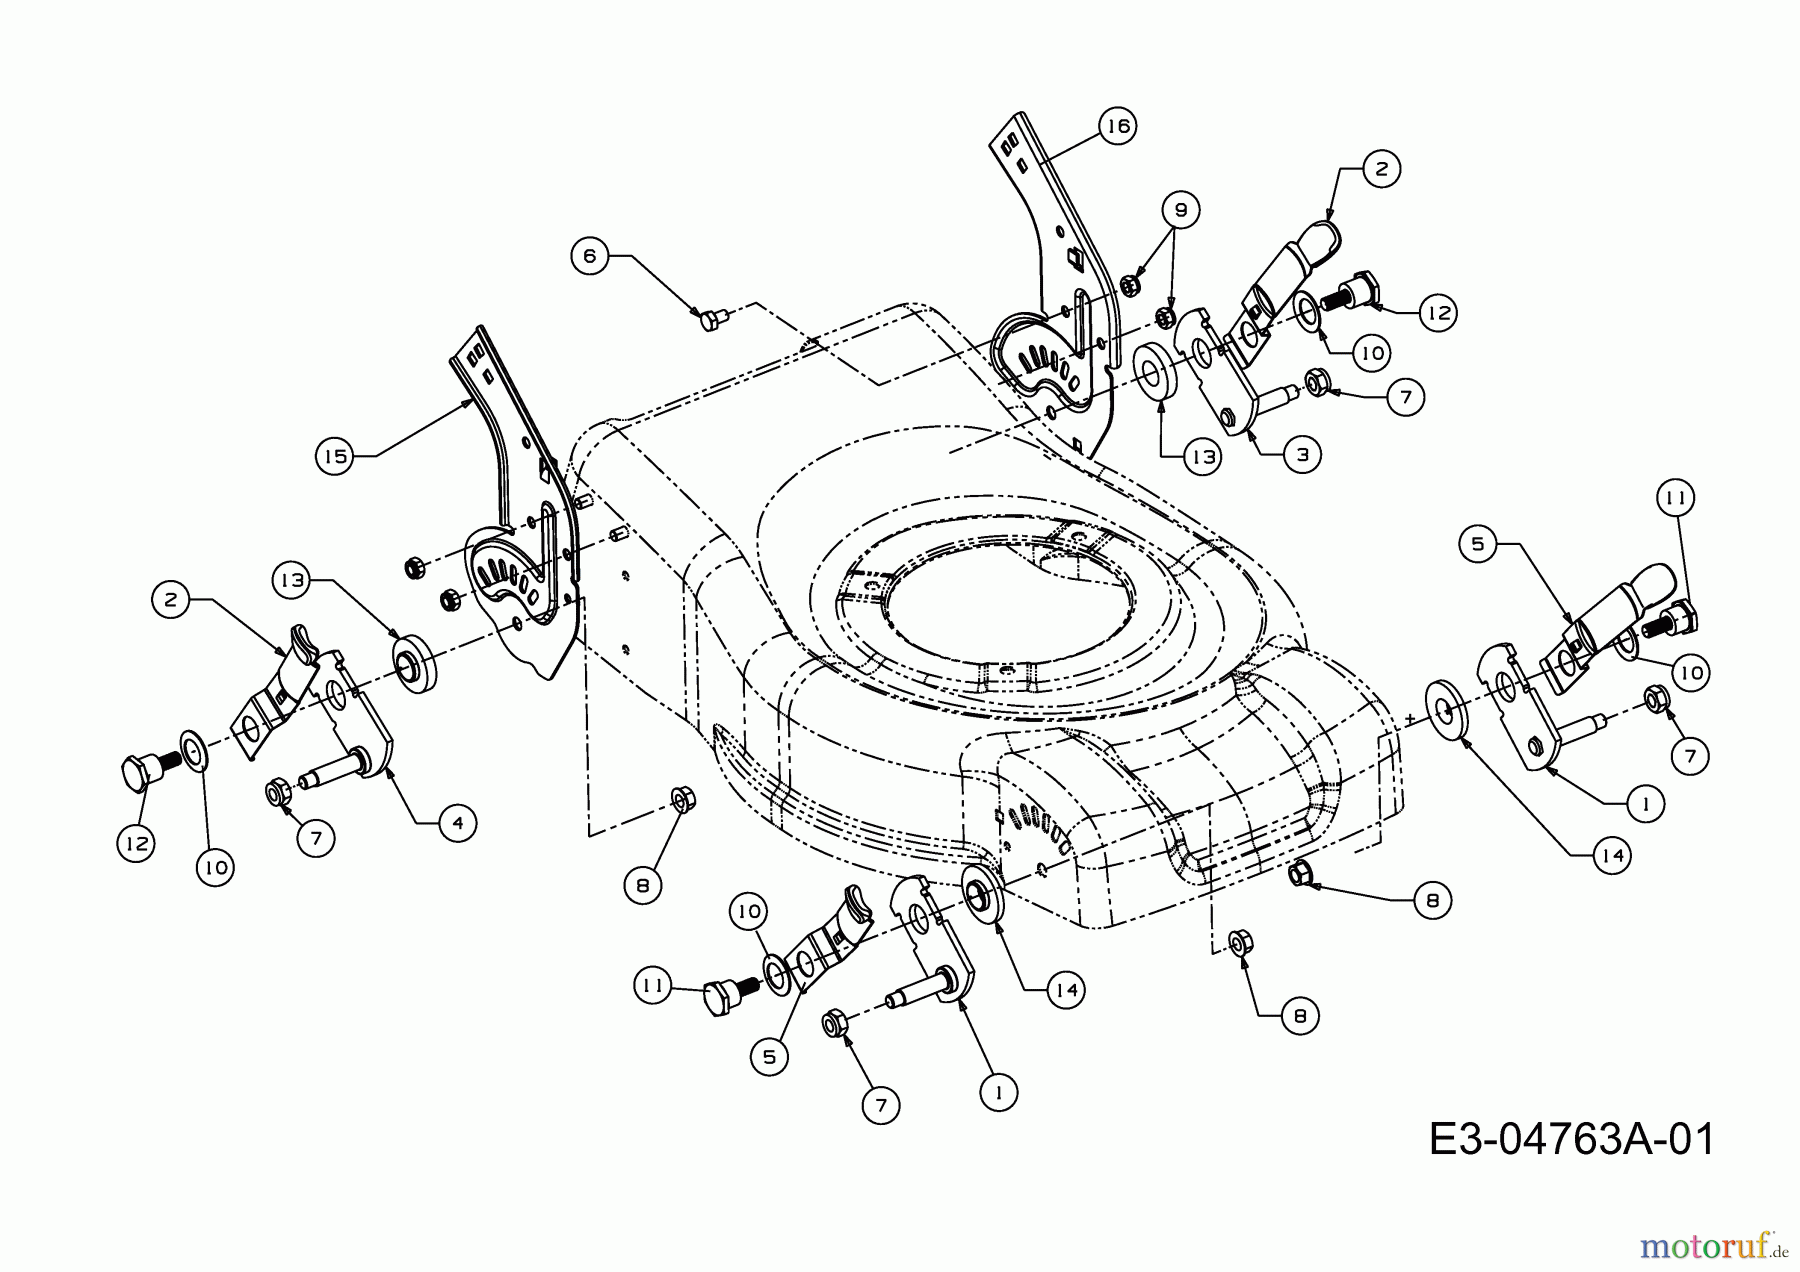  Mastercut Petrol mower P 400 11B-I1M8659  (2009) Cutting hight adjustment